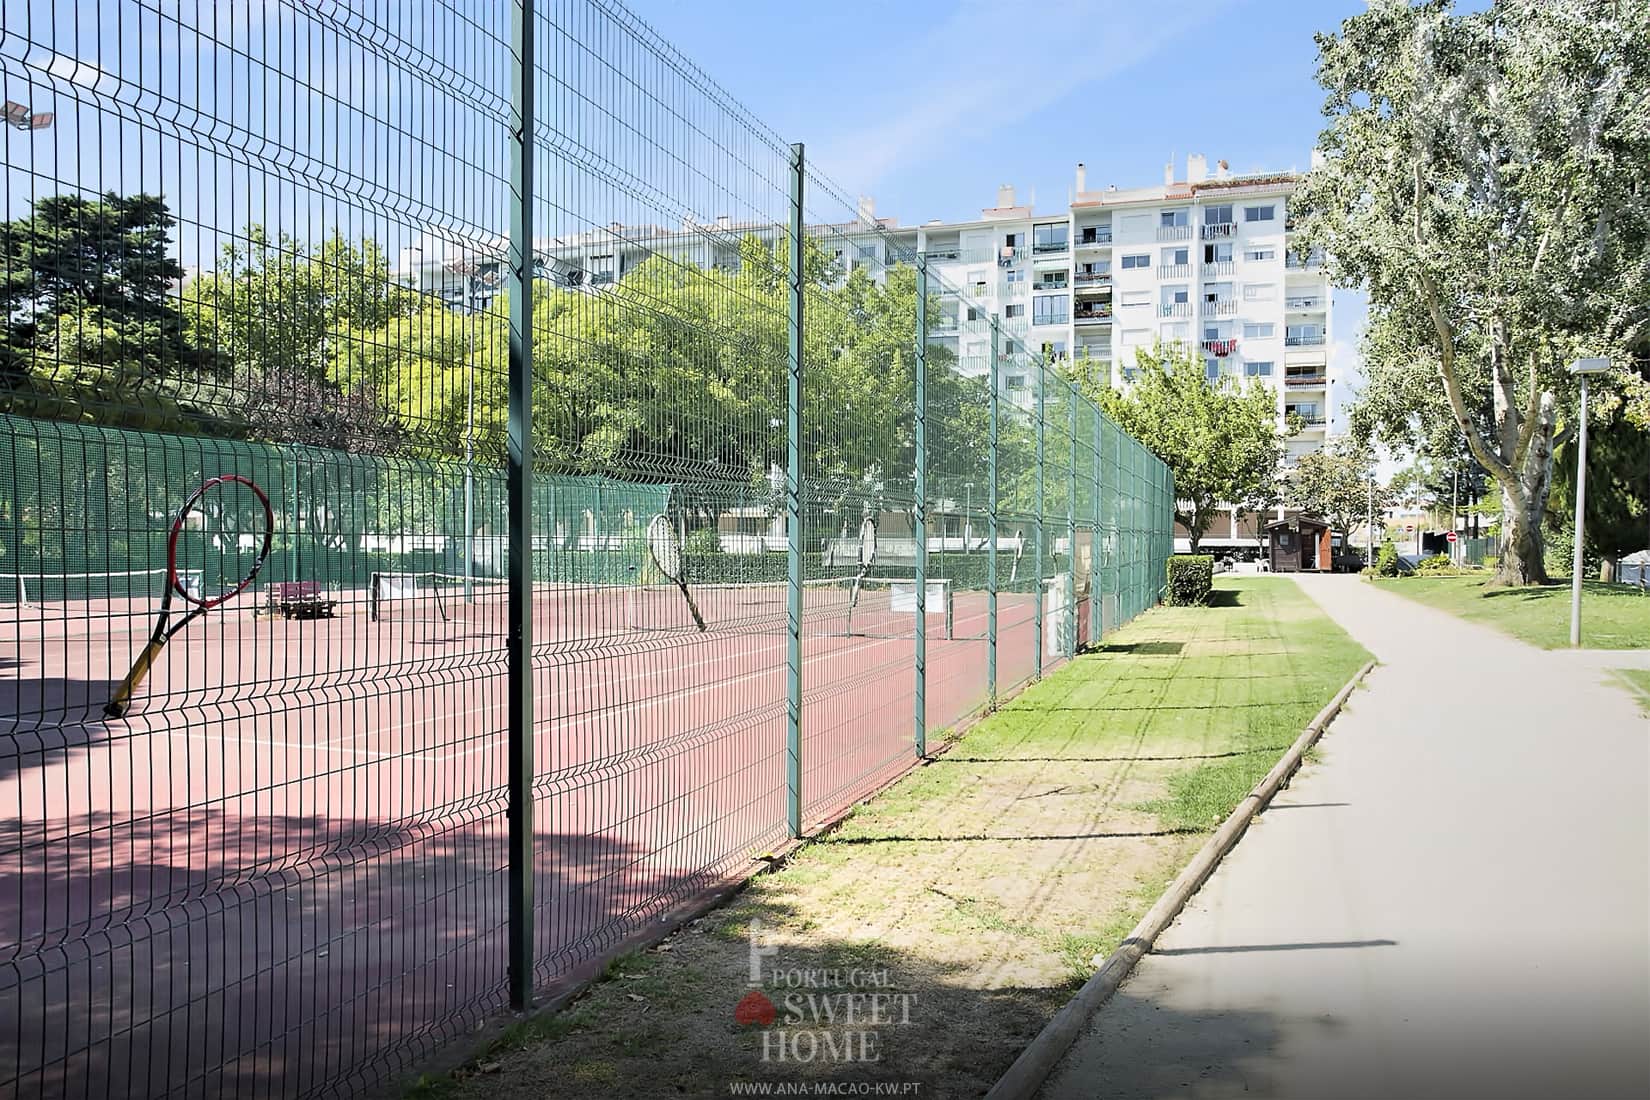 Tennis Courts at Quinta da Alagoa Park